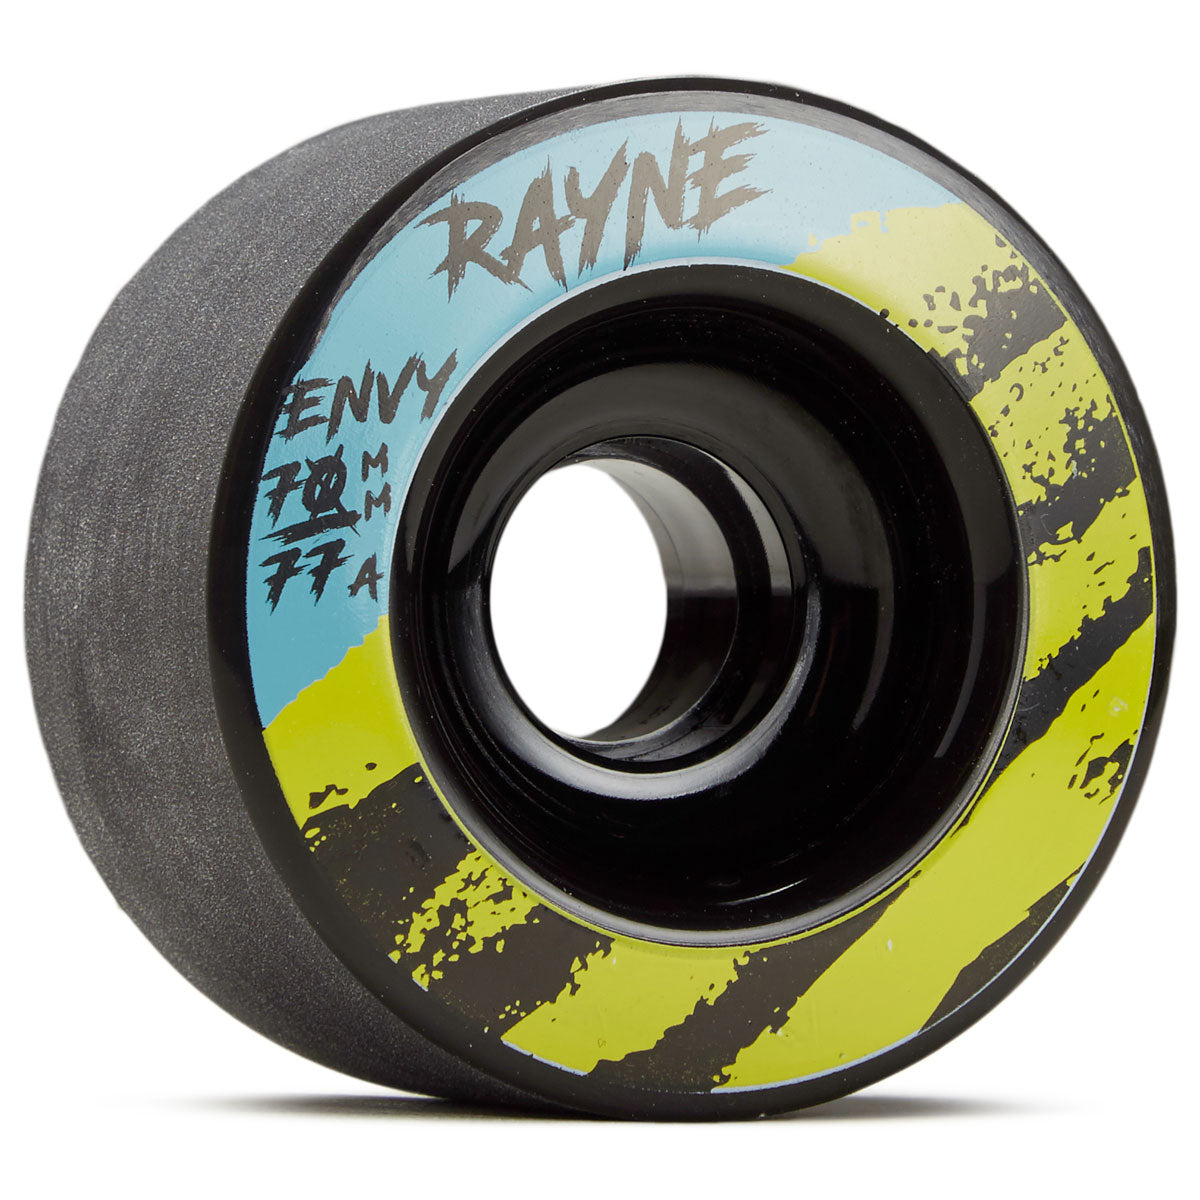 Rayne Envy V2 77a Longboard Wheels - Black - 70mm image 1